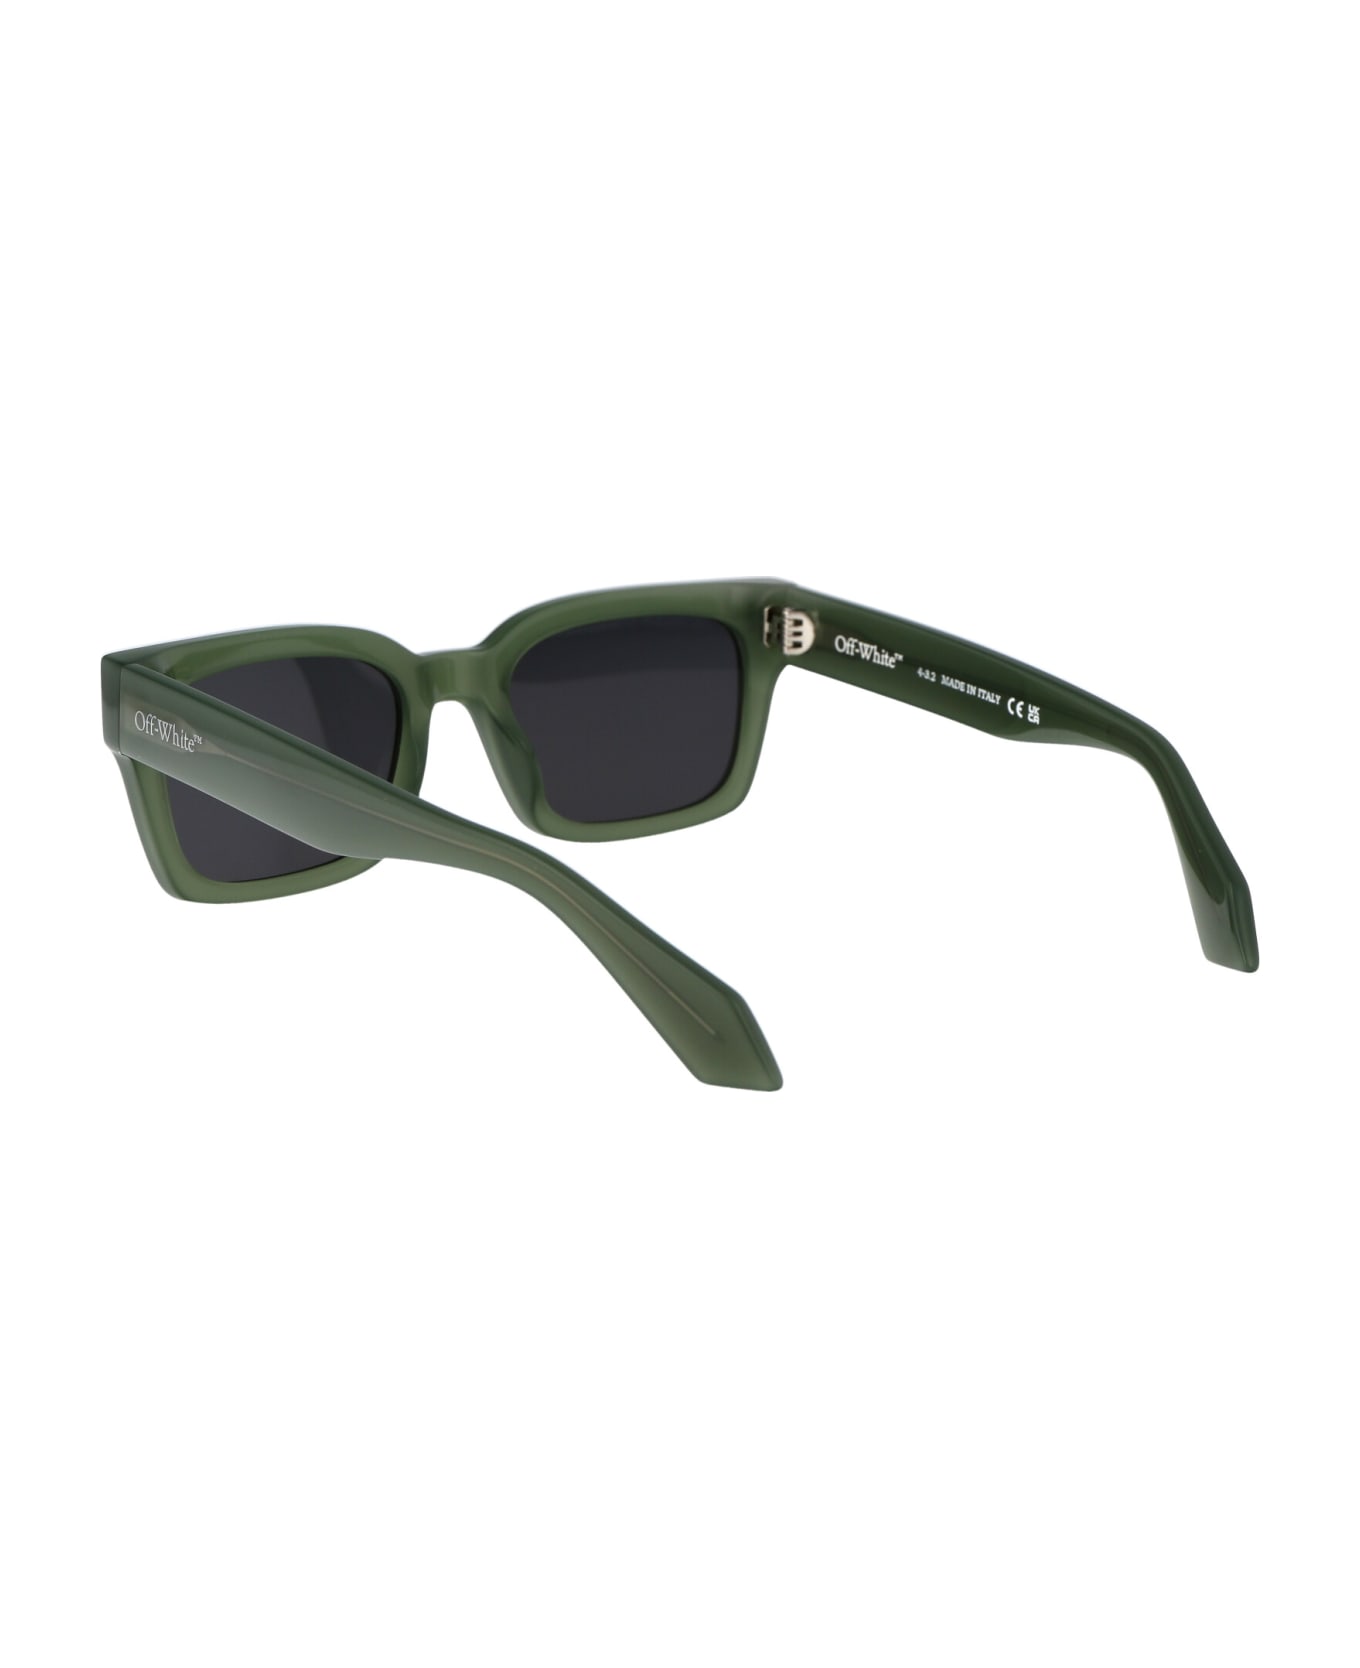 Off-White Midland Sunglasses - 5707 SAGE GREEN